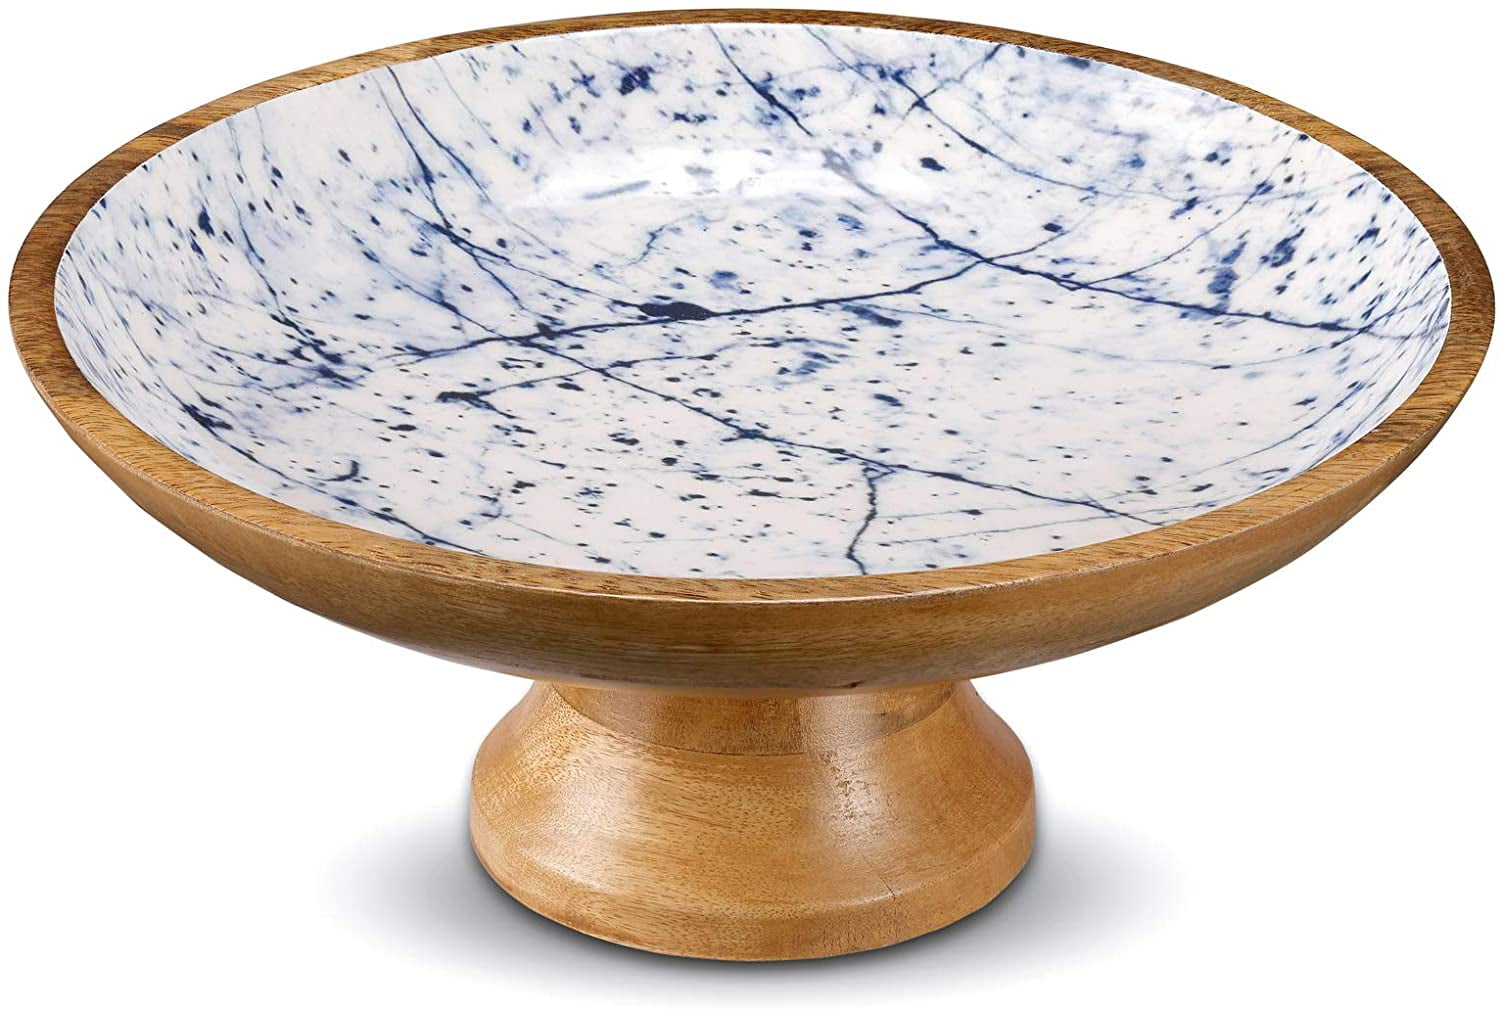 Marble Fruit Bowl & Marble Tabletop Designs